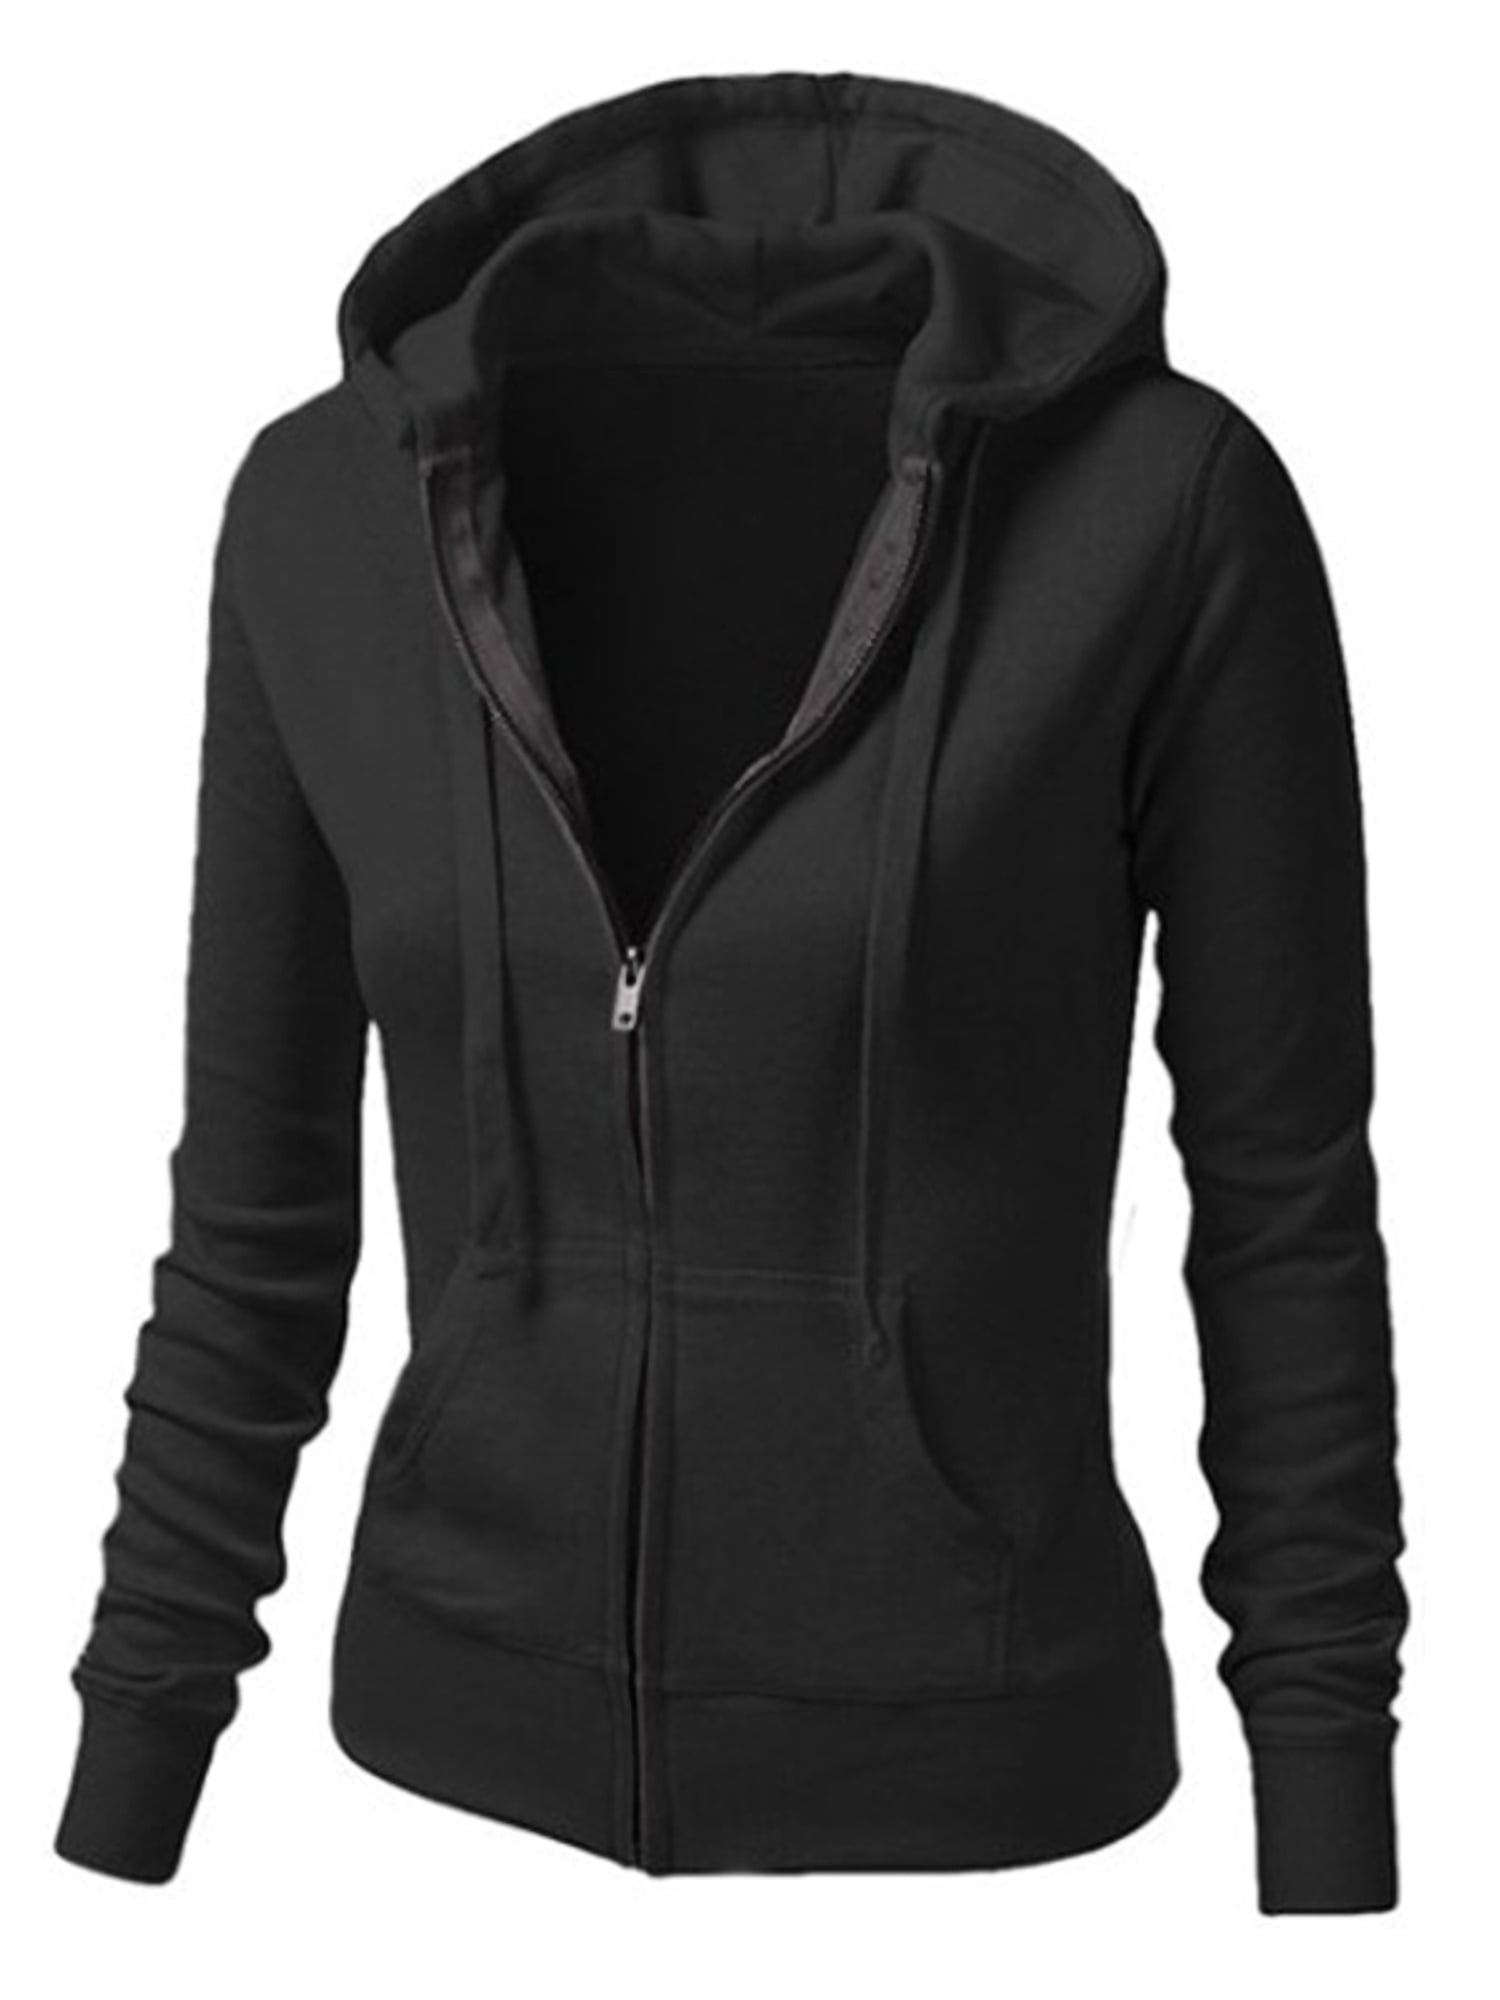 HIMONE Women Long Sleeve Hoodie Jacket Full Zip Up Lightweight ...